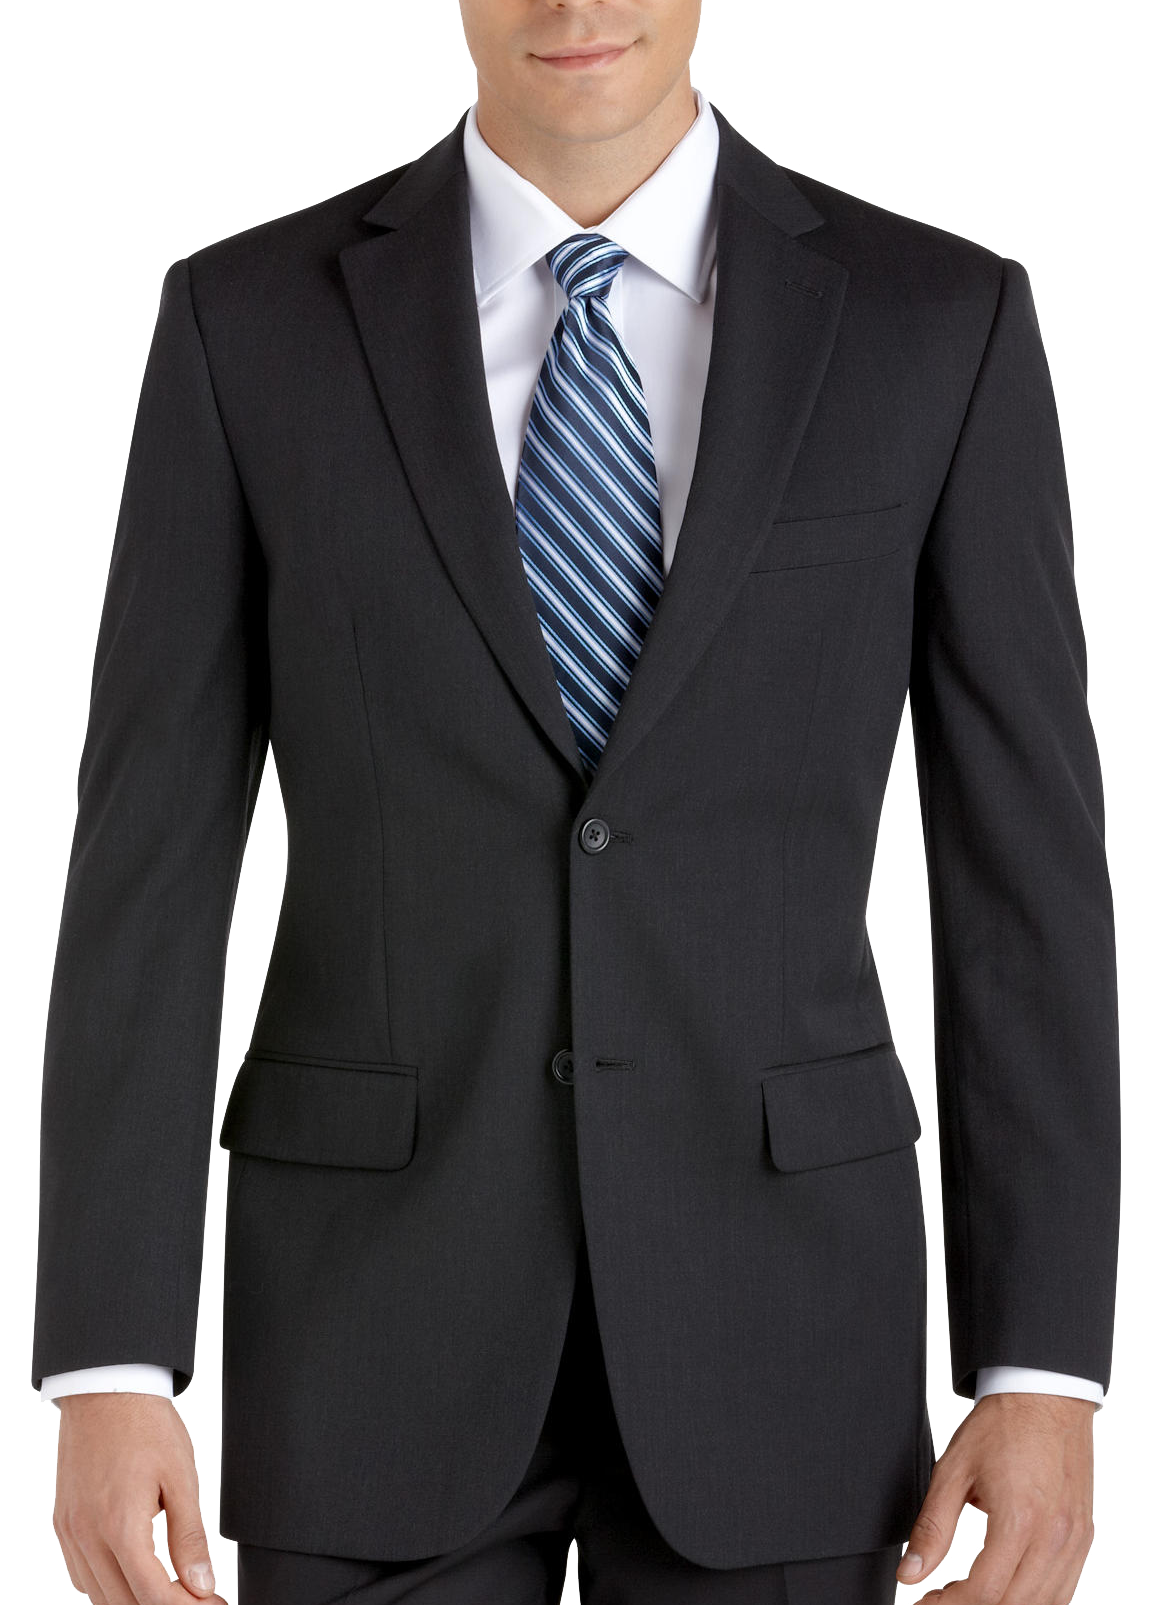 Pronto Uomo Platinum Executive Suit Separates - Men's Men's Wearhouse